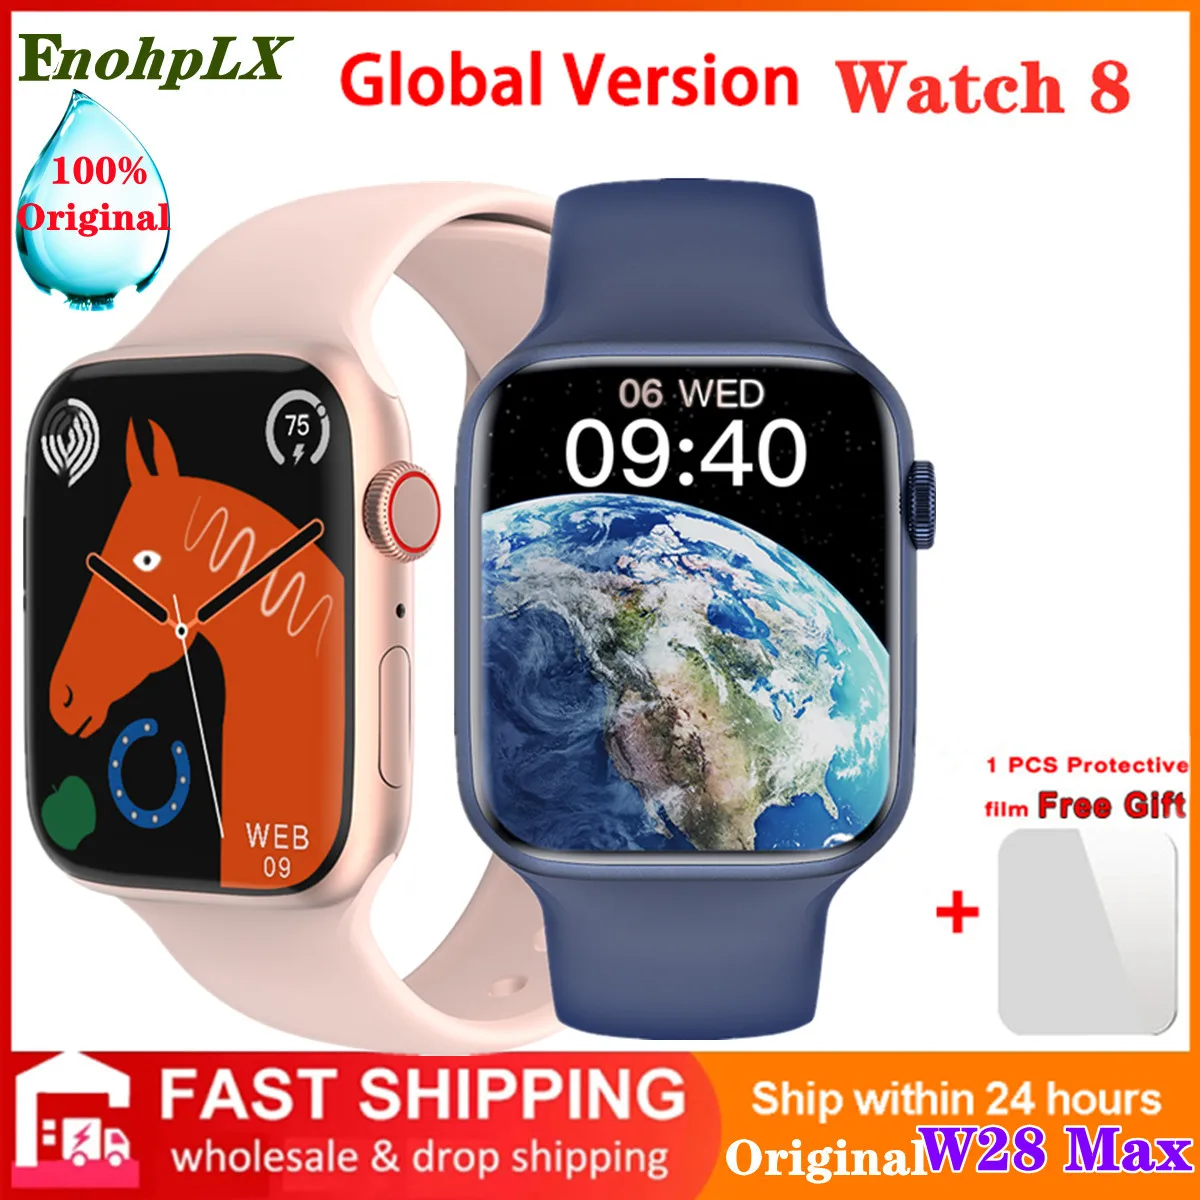 

2 / 3 PCS Original W28 MAX Smart Watch 2.0 inch Siri 45MM Series 8 Wireless Charger NFC ECG Bluetooth Call Waterproof Smartwatch